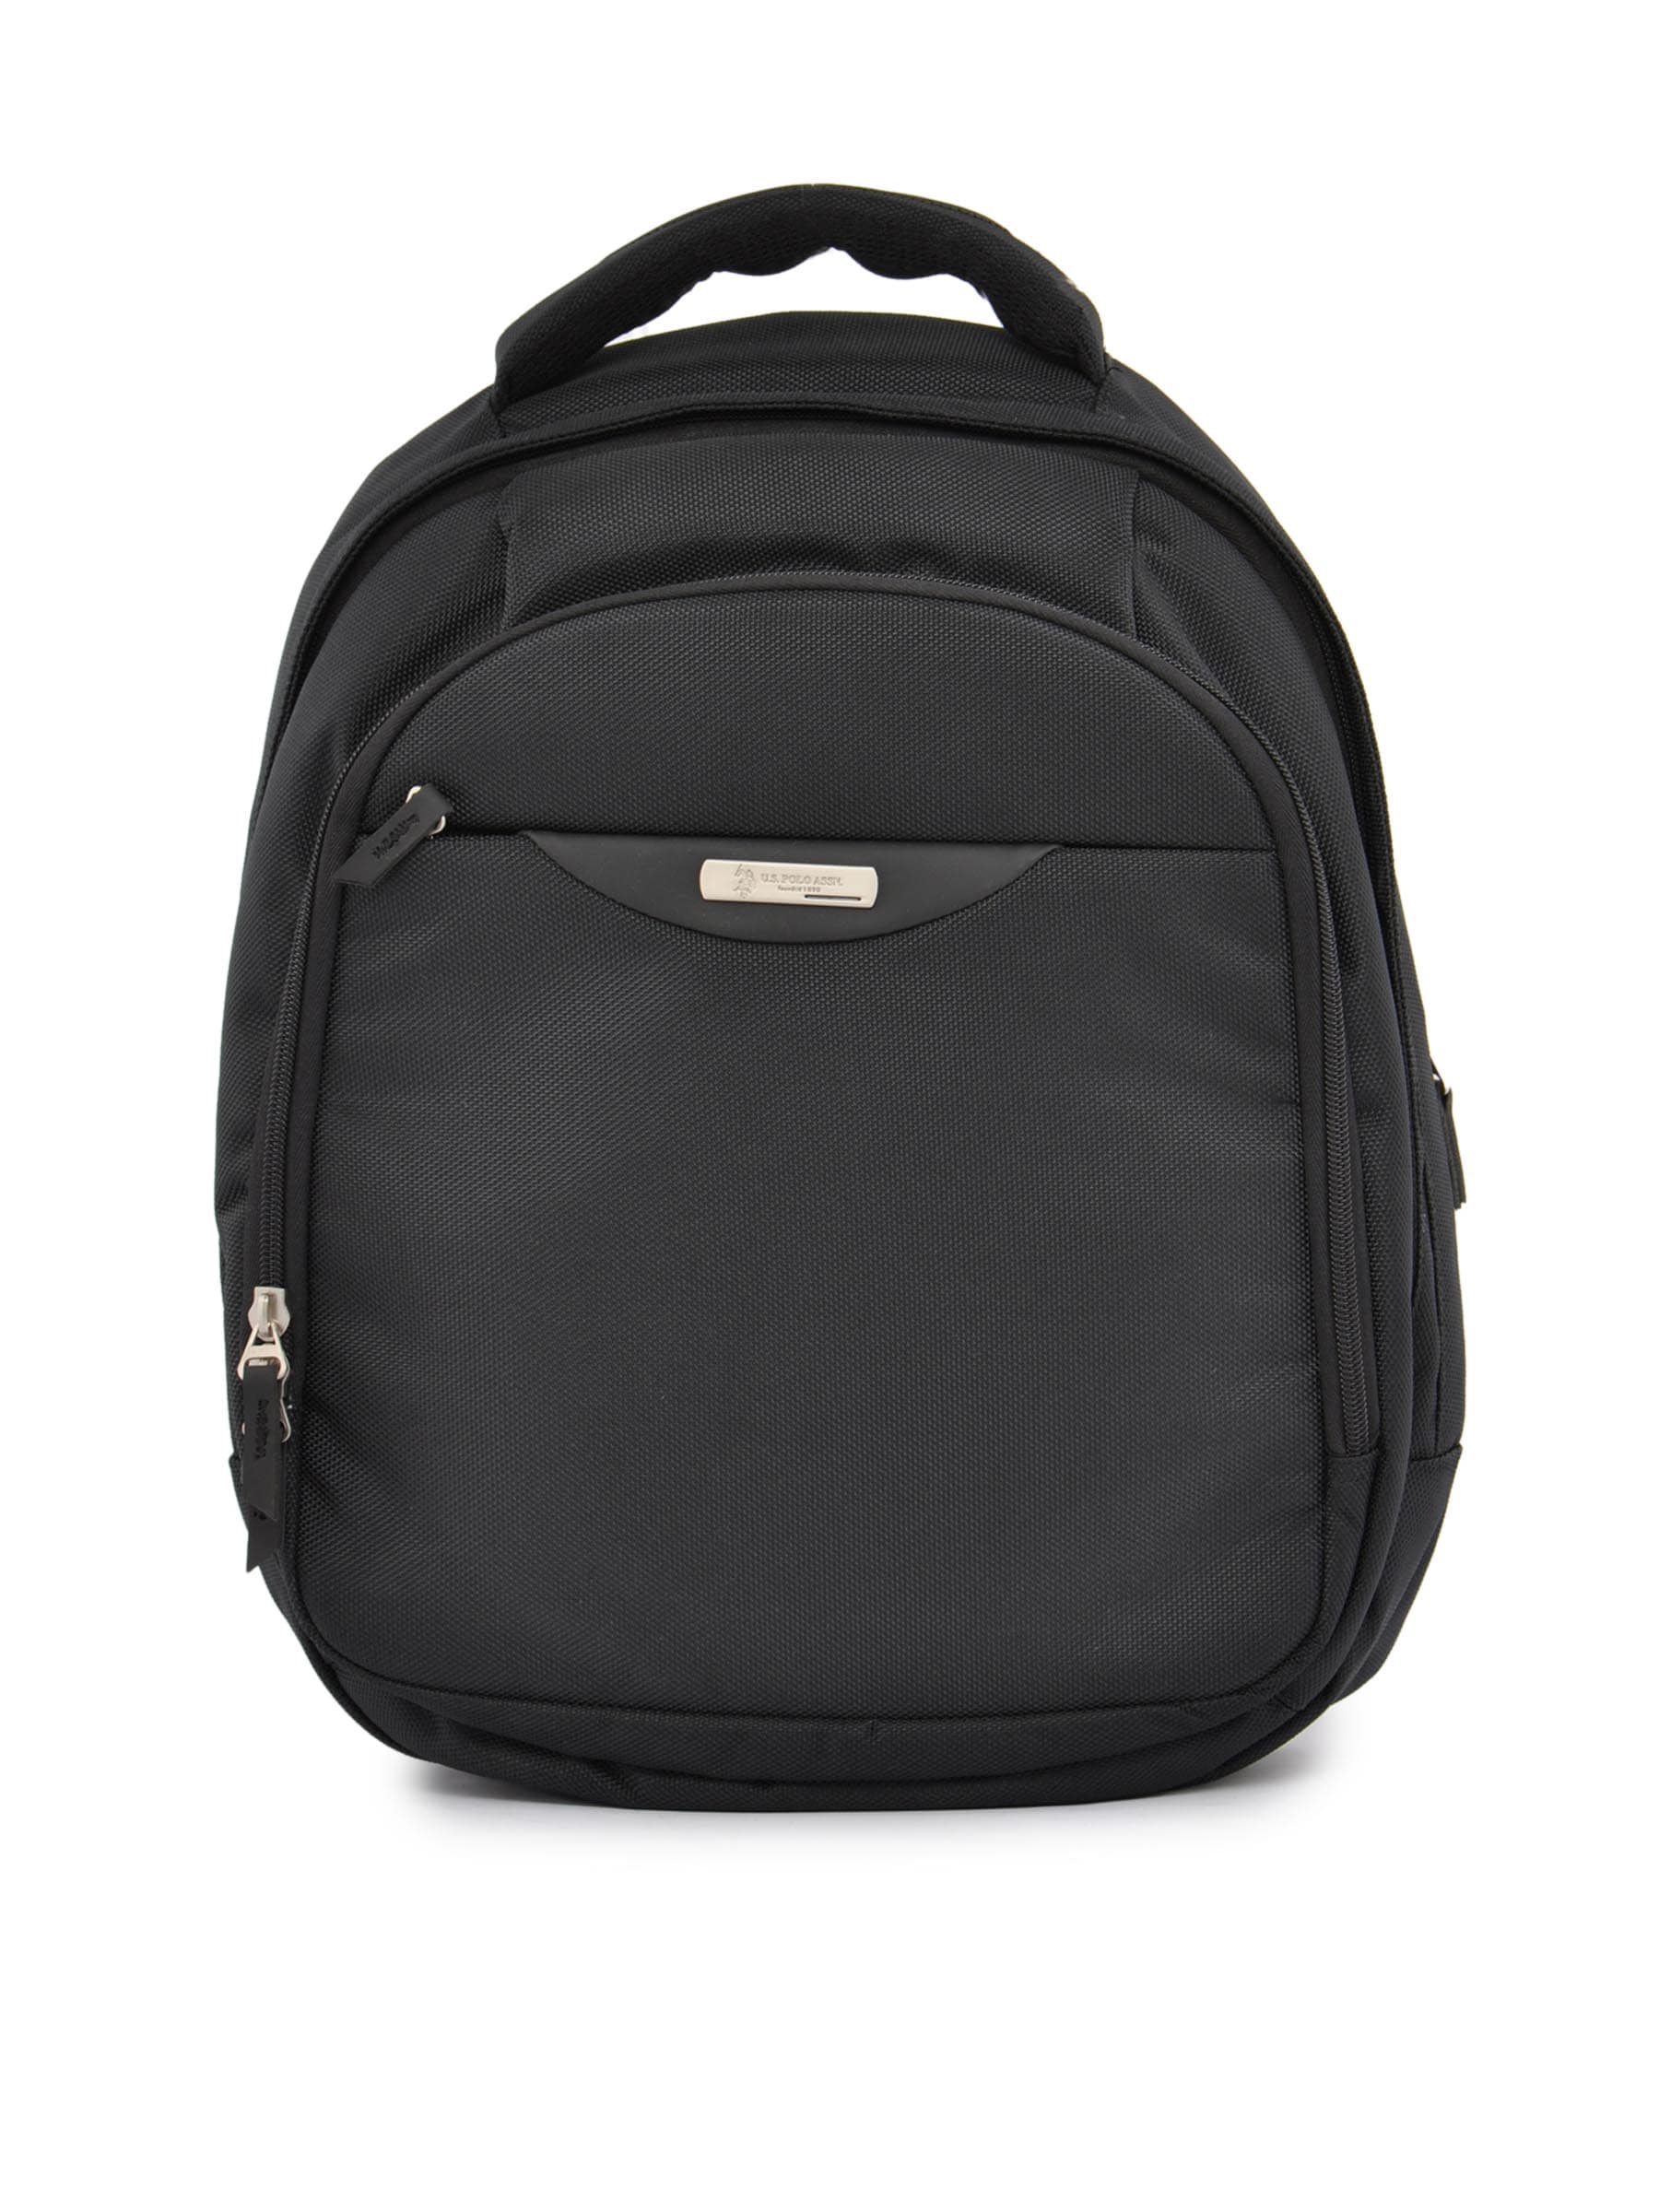 U.S. Polo Assn. Unisex Black Backpack